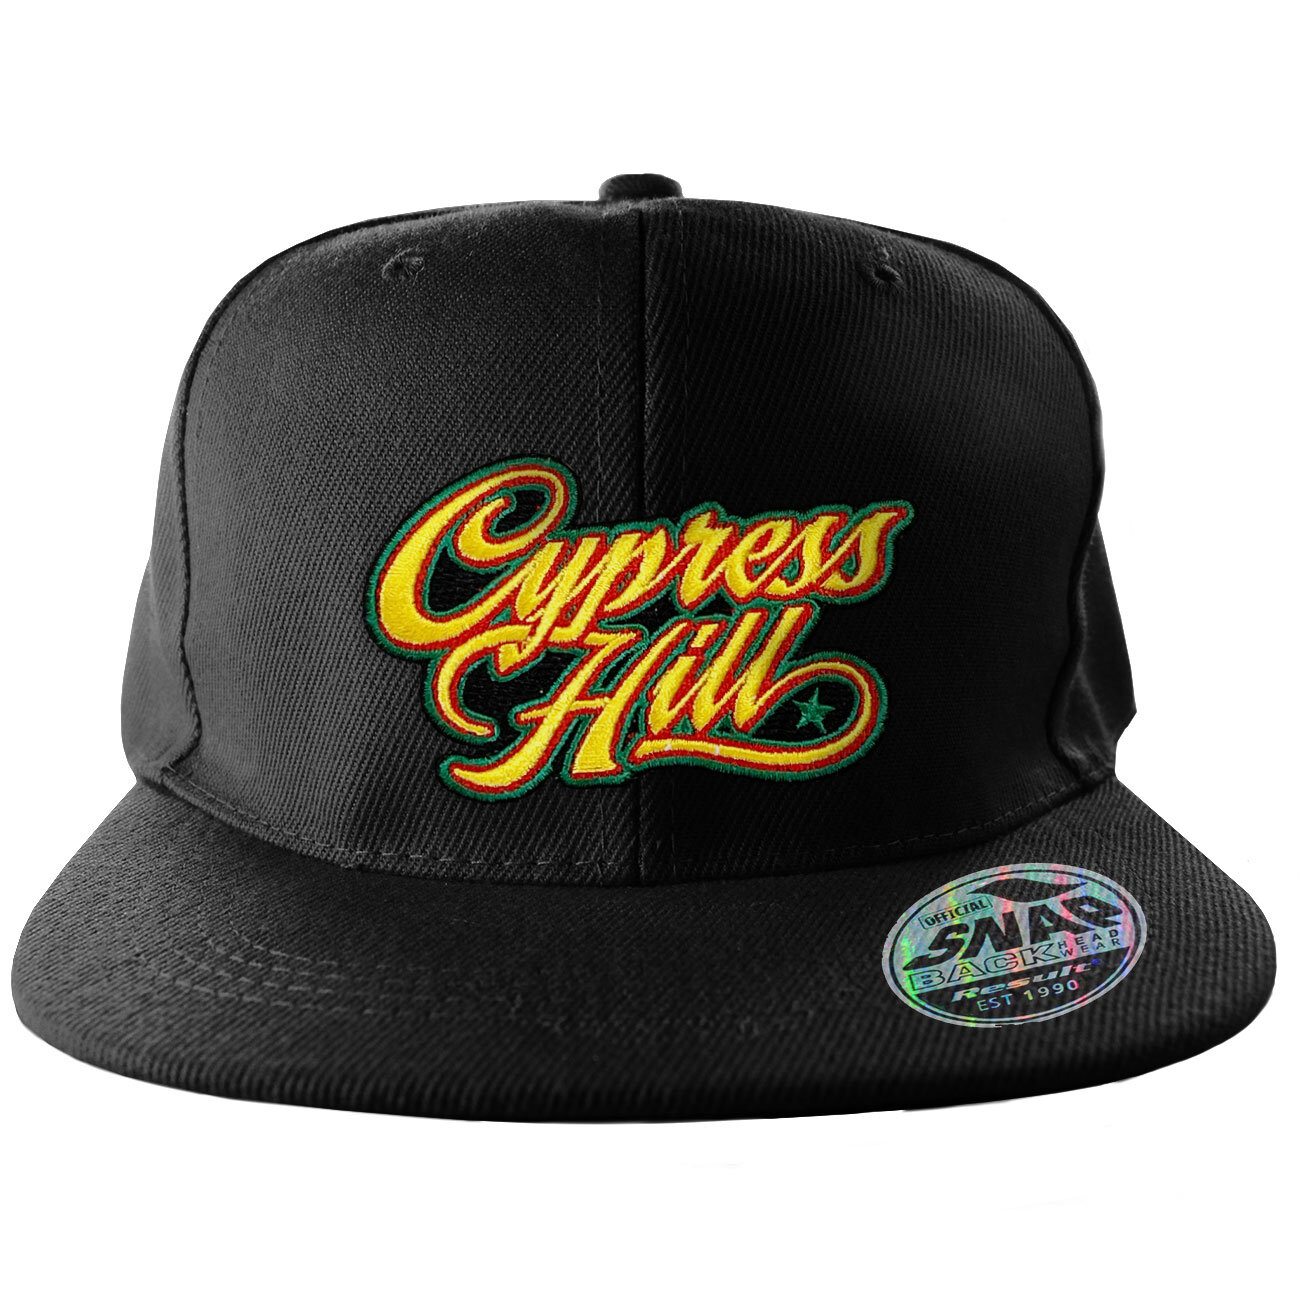 Cypress Hill Standard Snapback Cap